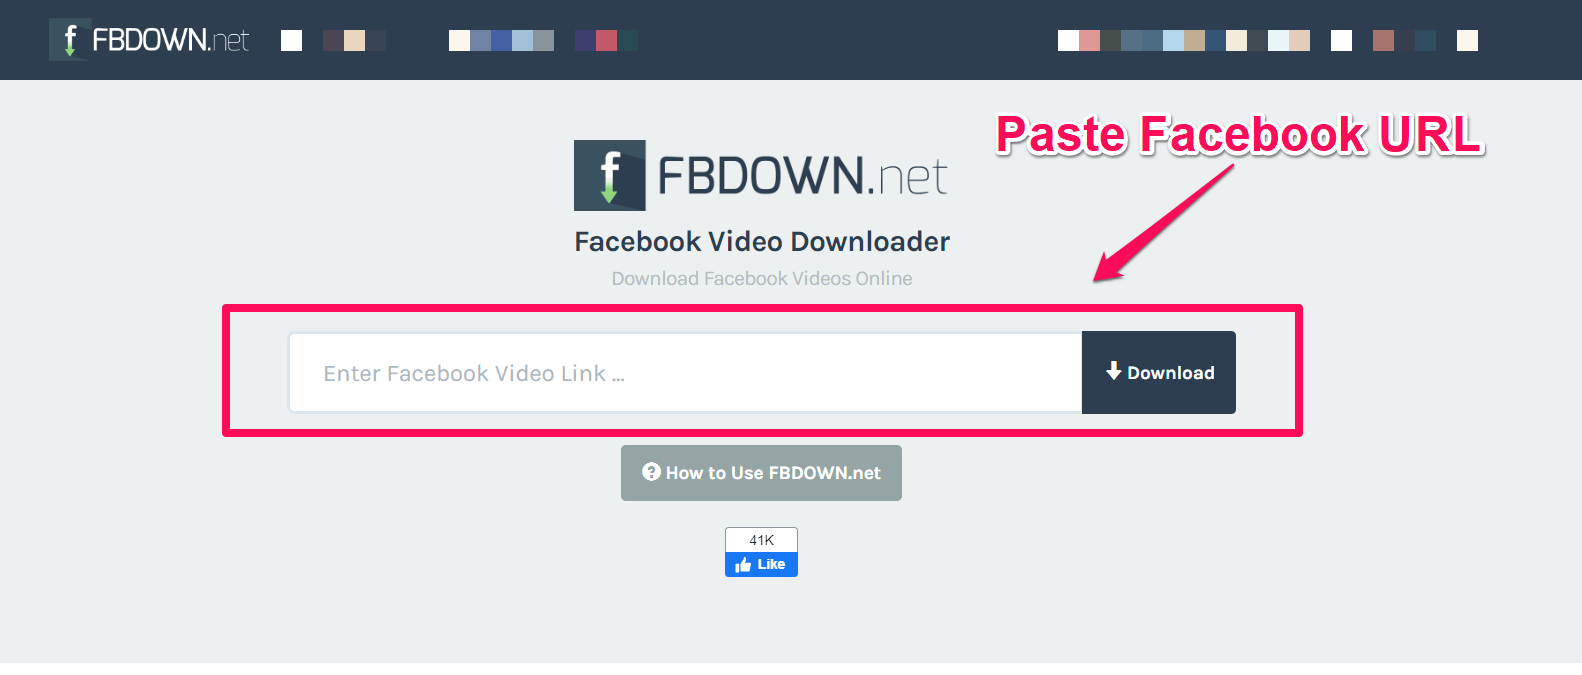 Facebook Video Downloader 6.17.6 instal the last version for ios